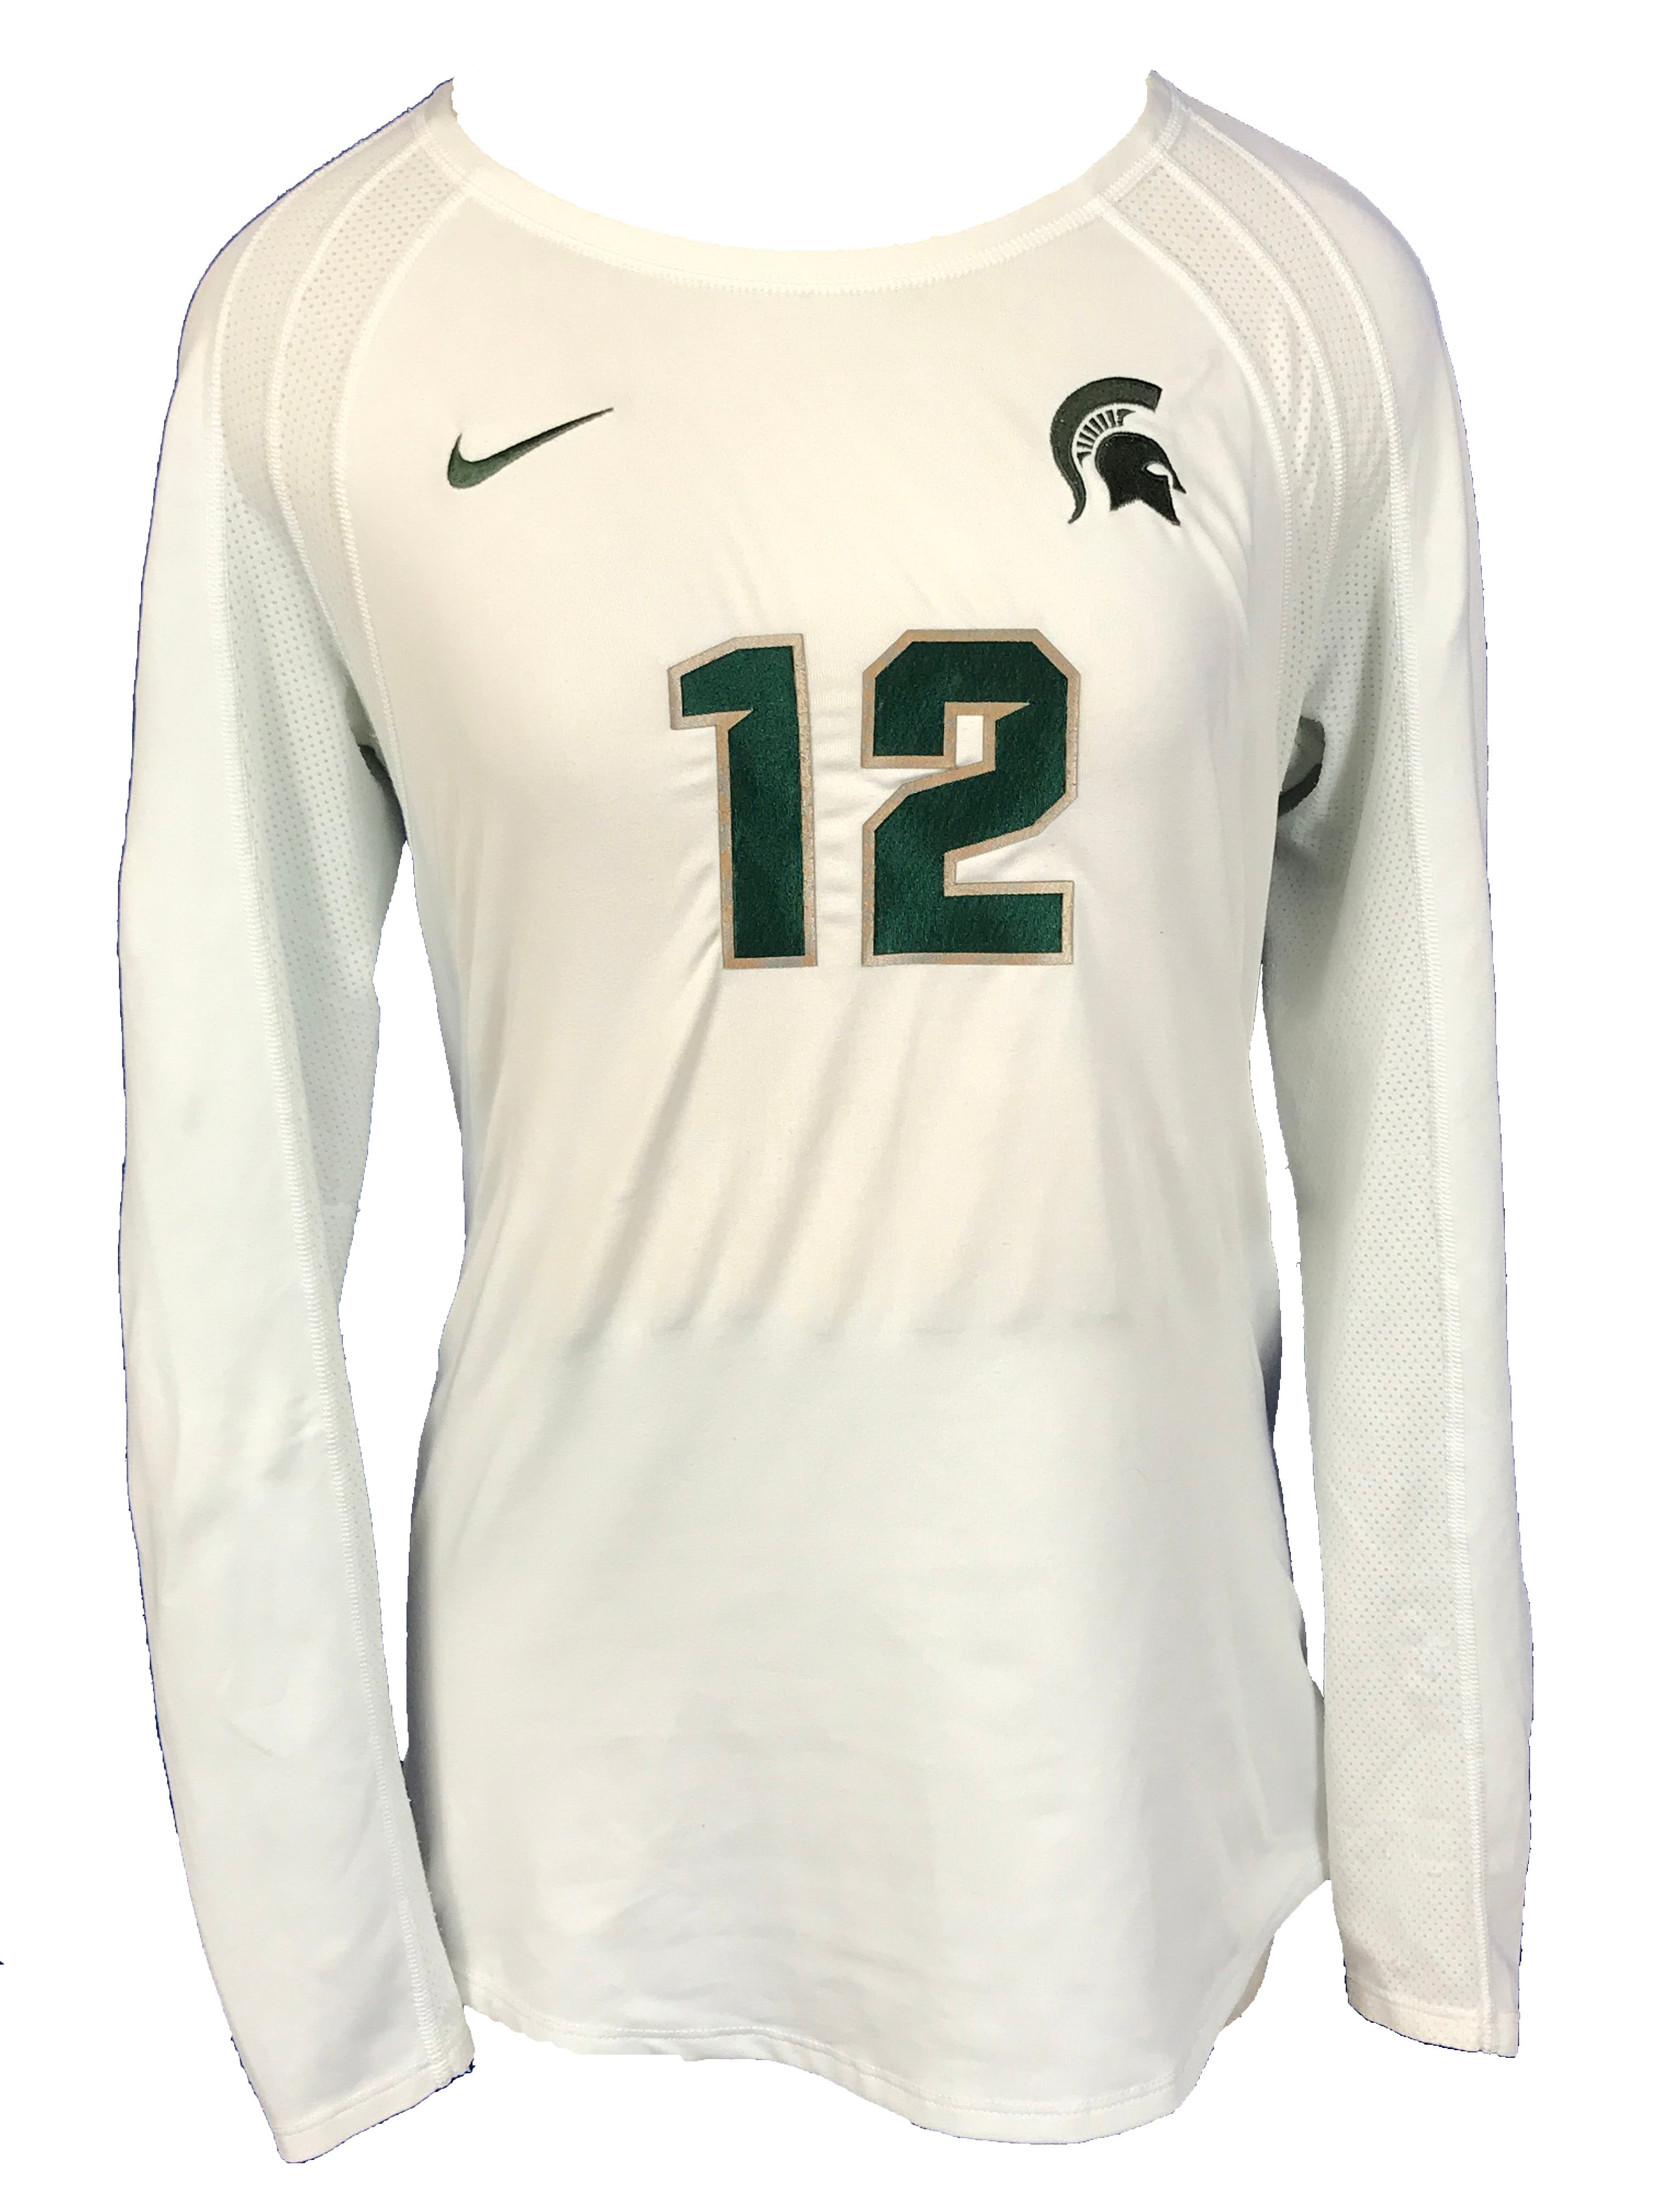 Nike White Long Sleeve MSU Volleyball Jersey #12 Women's Size L